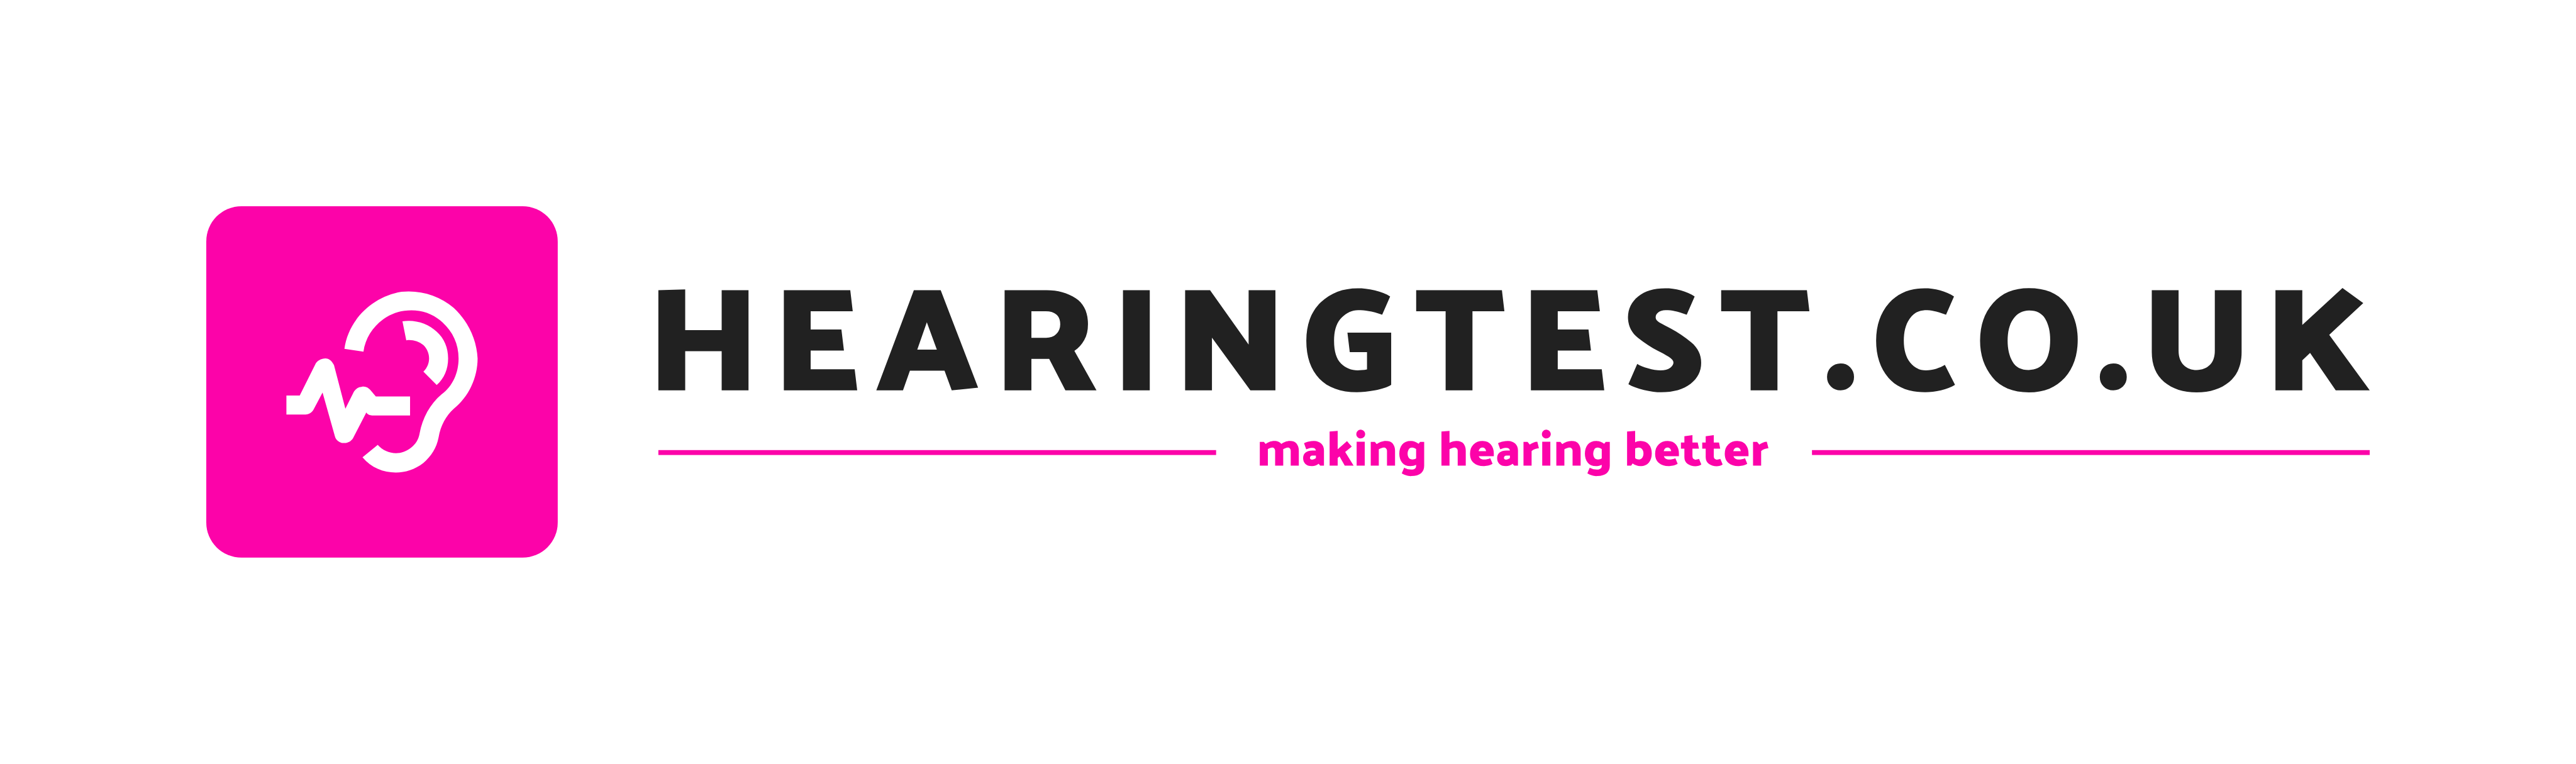 Free Hearing Test for Adults in Tunbridge Wells | Hearingtest.co.uk